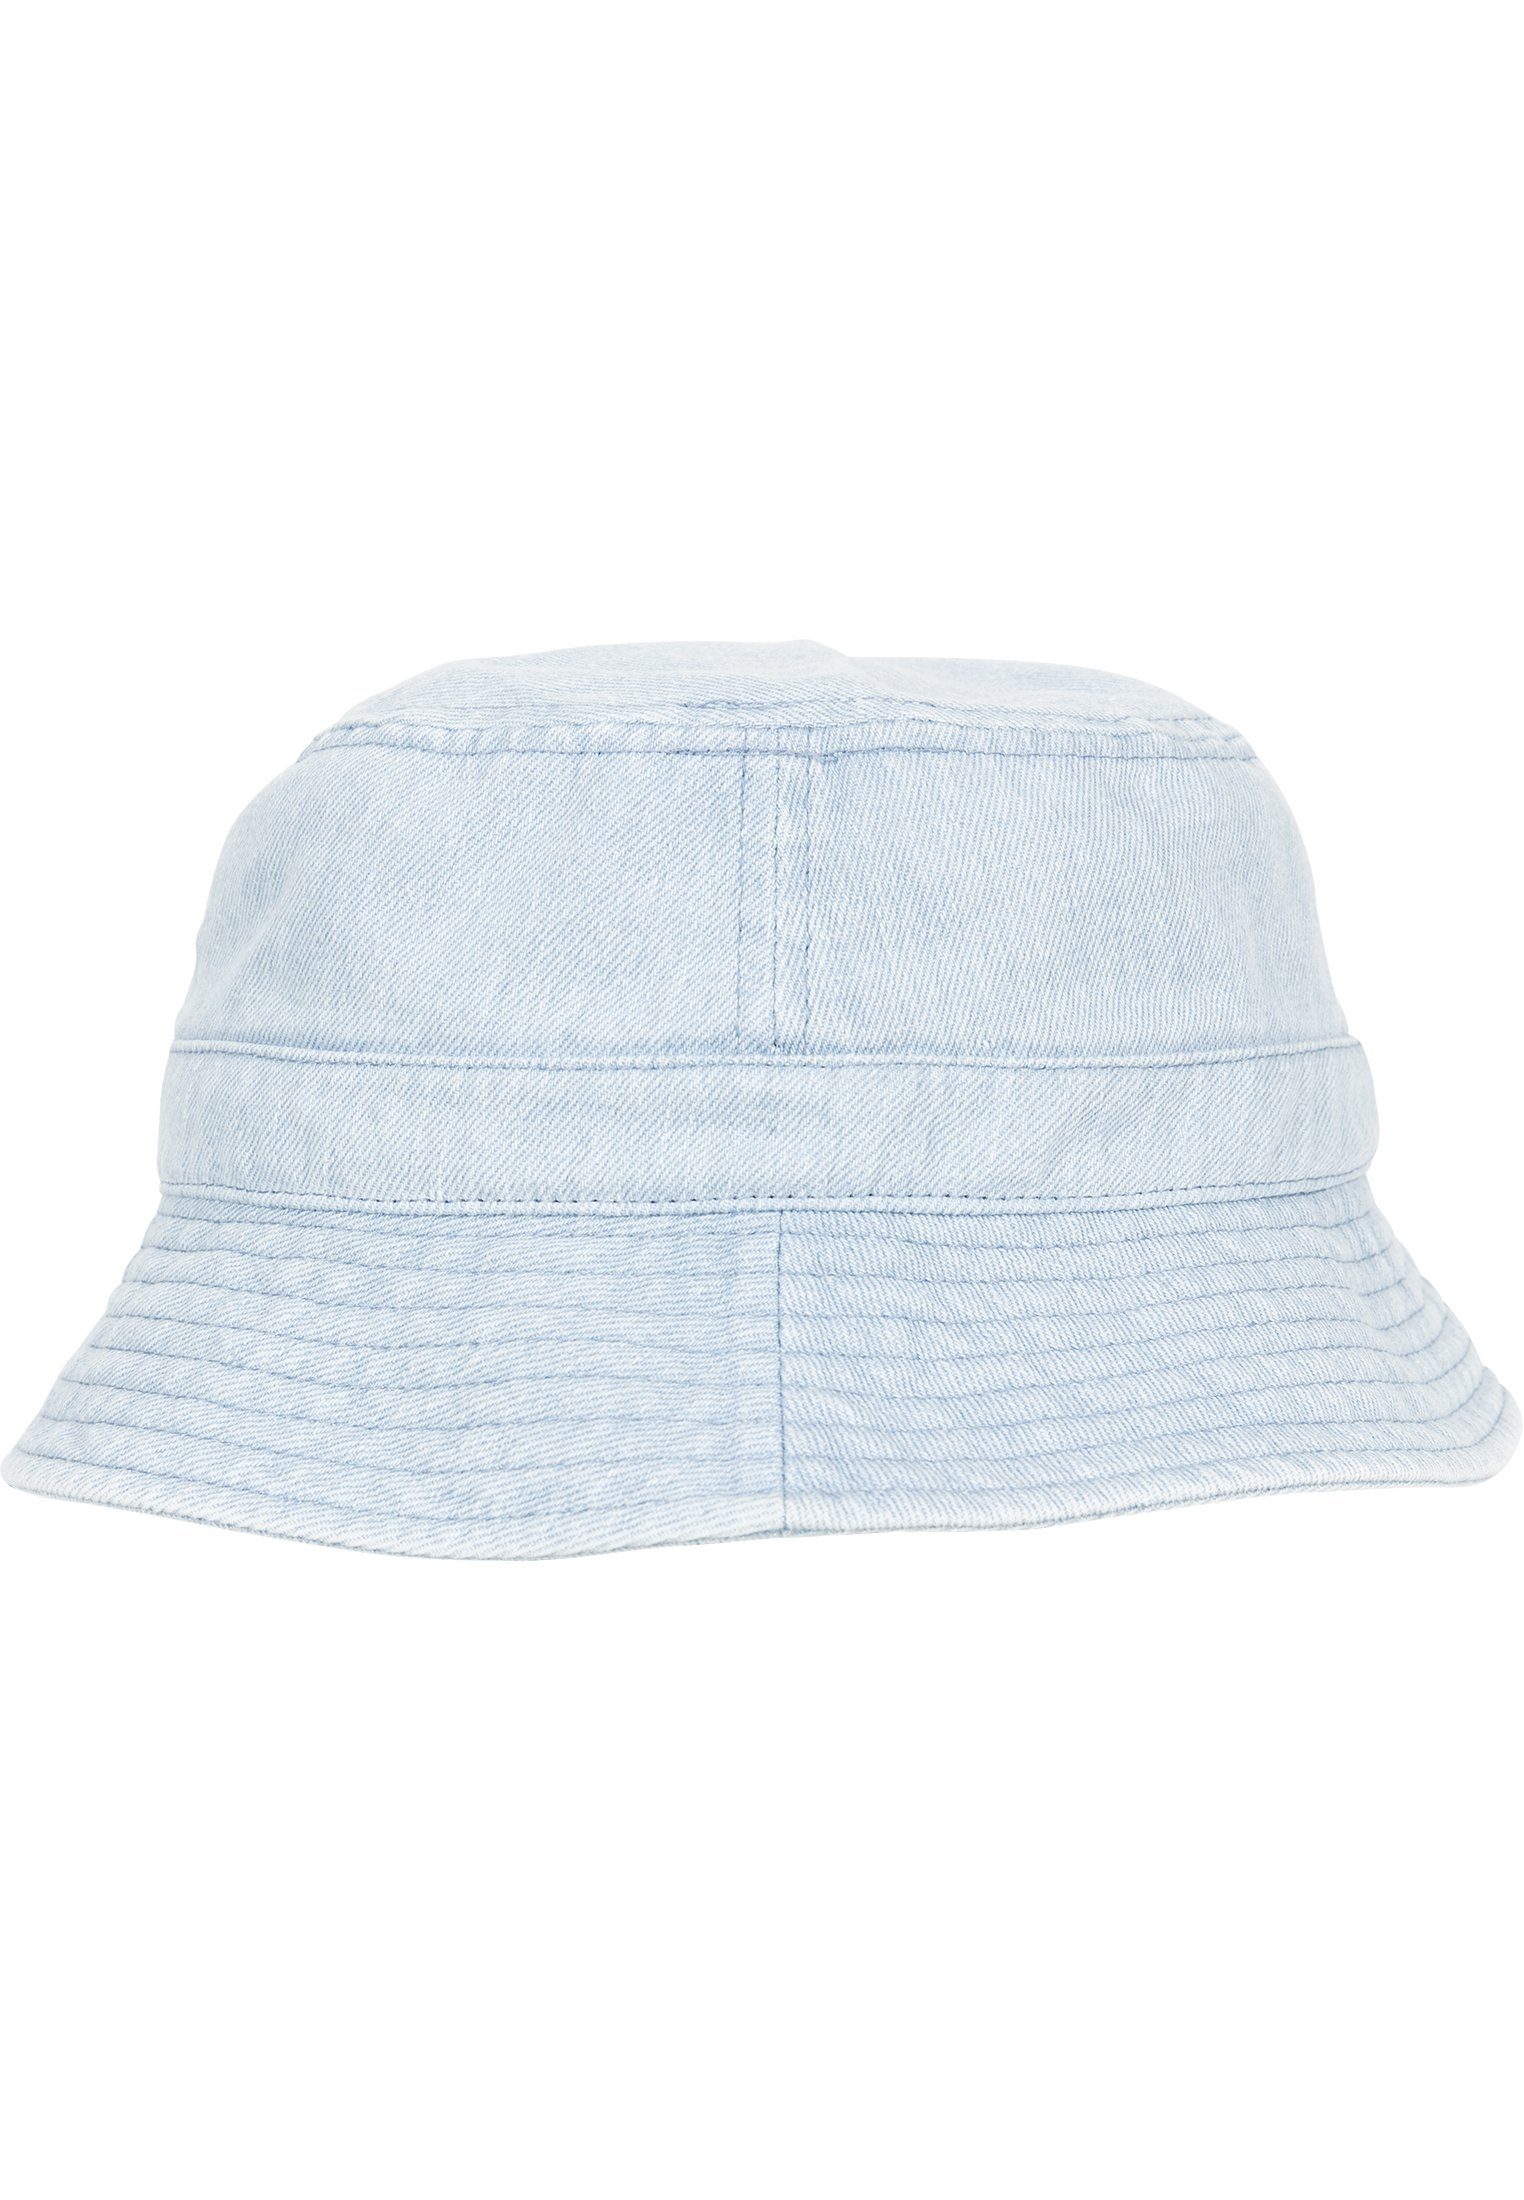 Flexfit Flex Cap Denim Hat blue Bucket Hat Bucket light